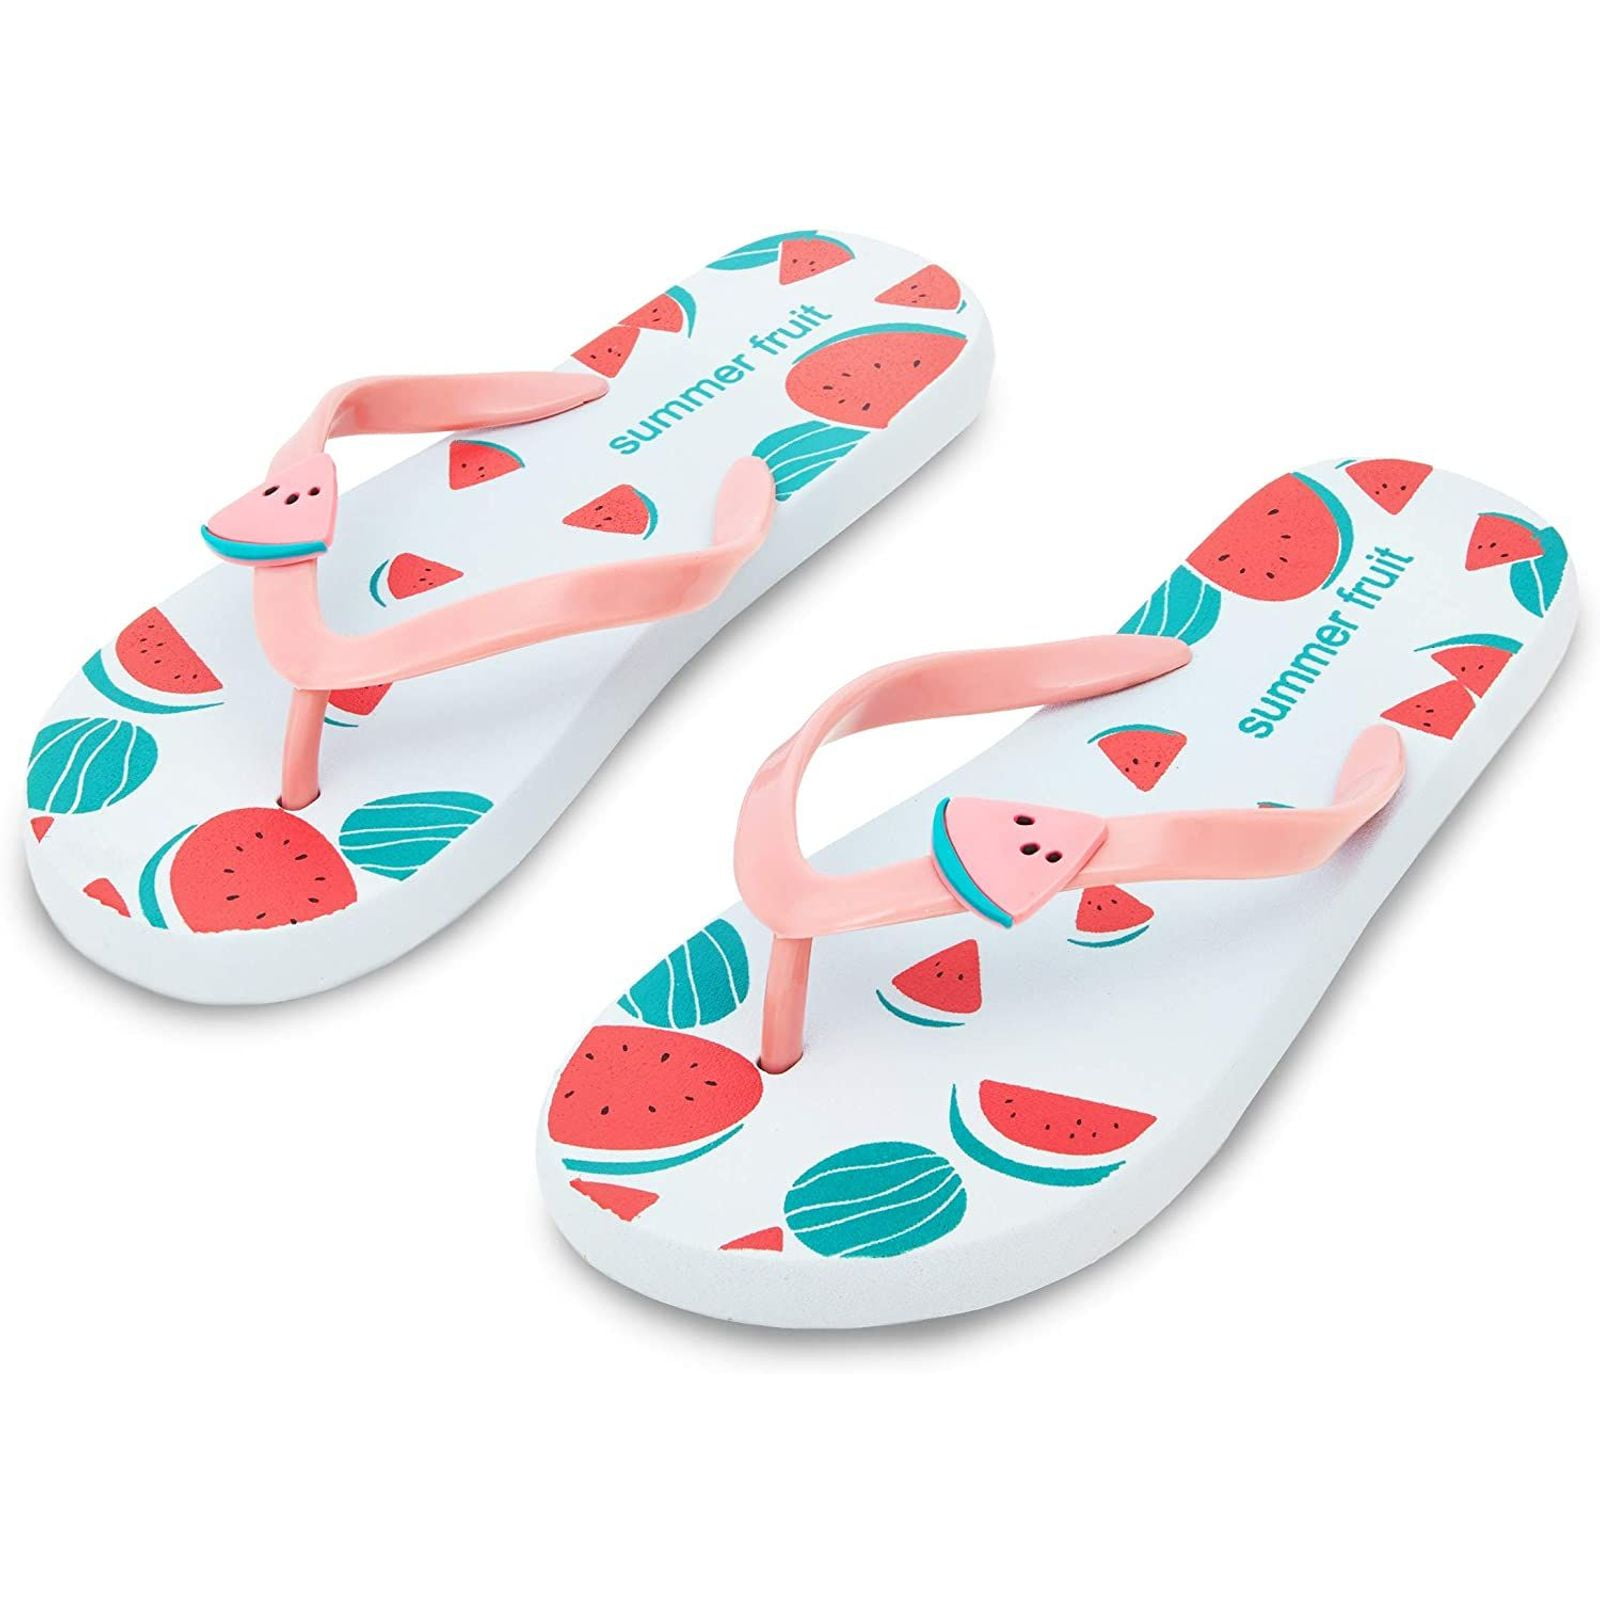 Young women Tropical Watermelon Fruit Black Slip on Beach Sandals and Anti-Slip Shower Slipper Comfort Sandals